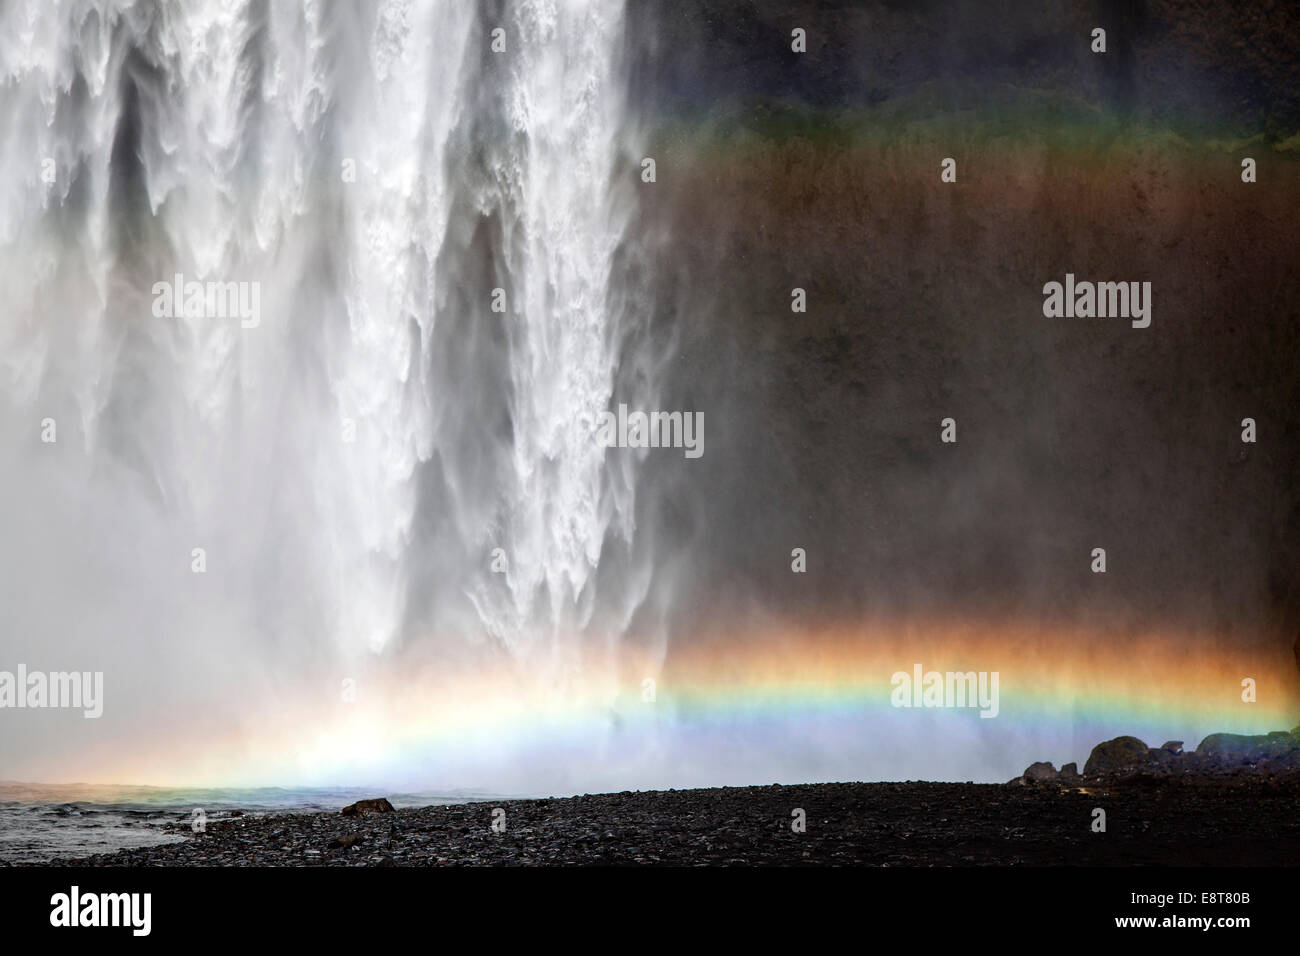 Waterfall with a rainbow, Skogafoss, Iceland Stock Photo